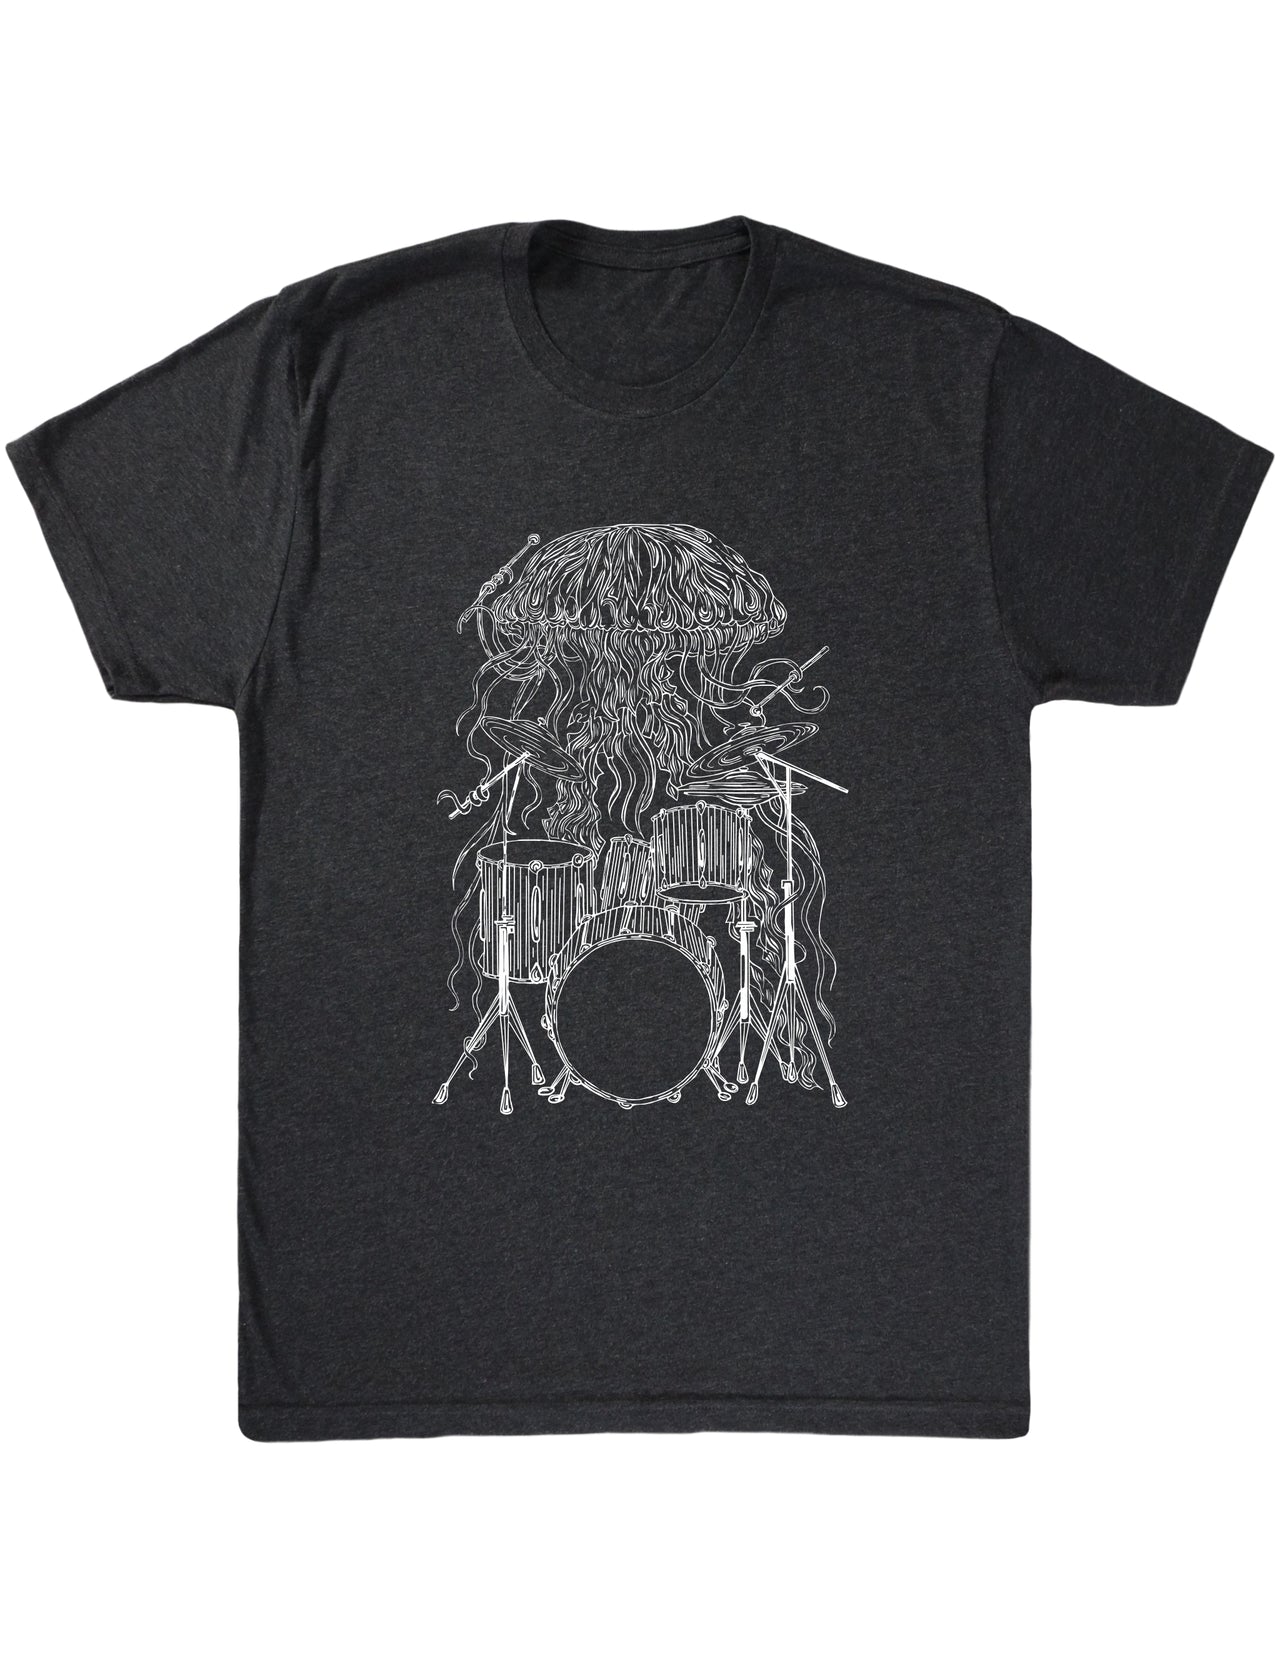 seembo-jellyfish-drummer-playing-drums-art-men-vintage-black-t-shirt